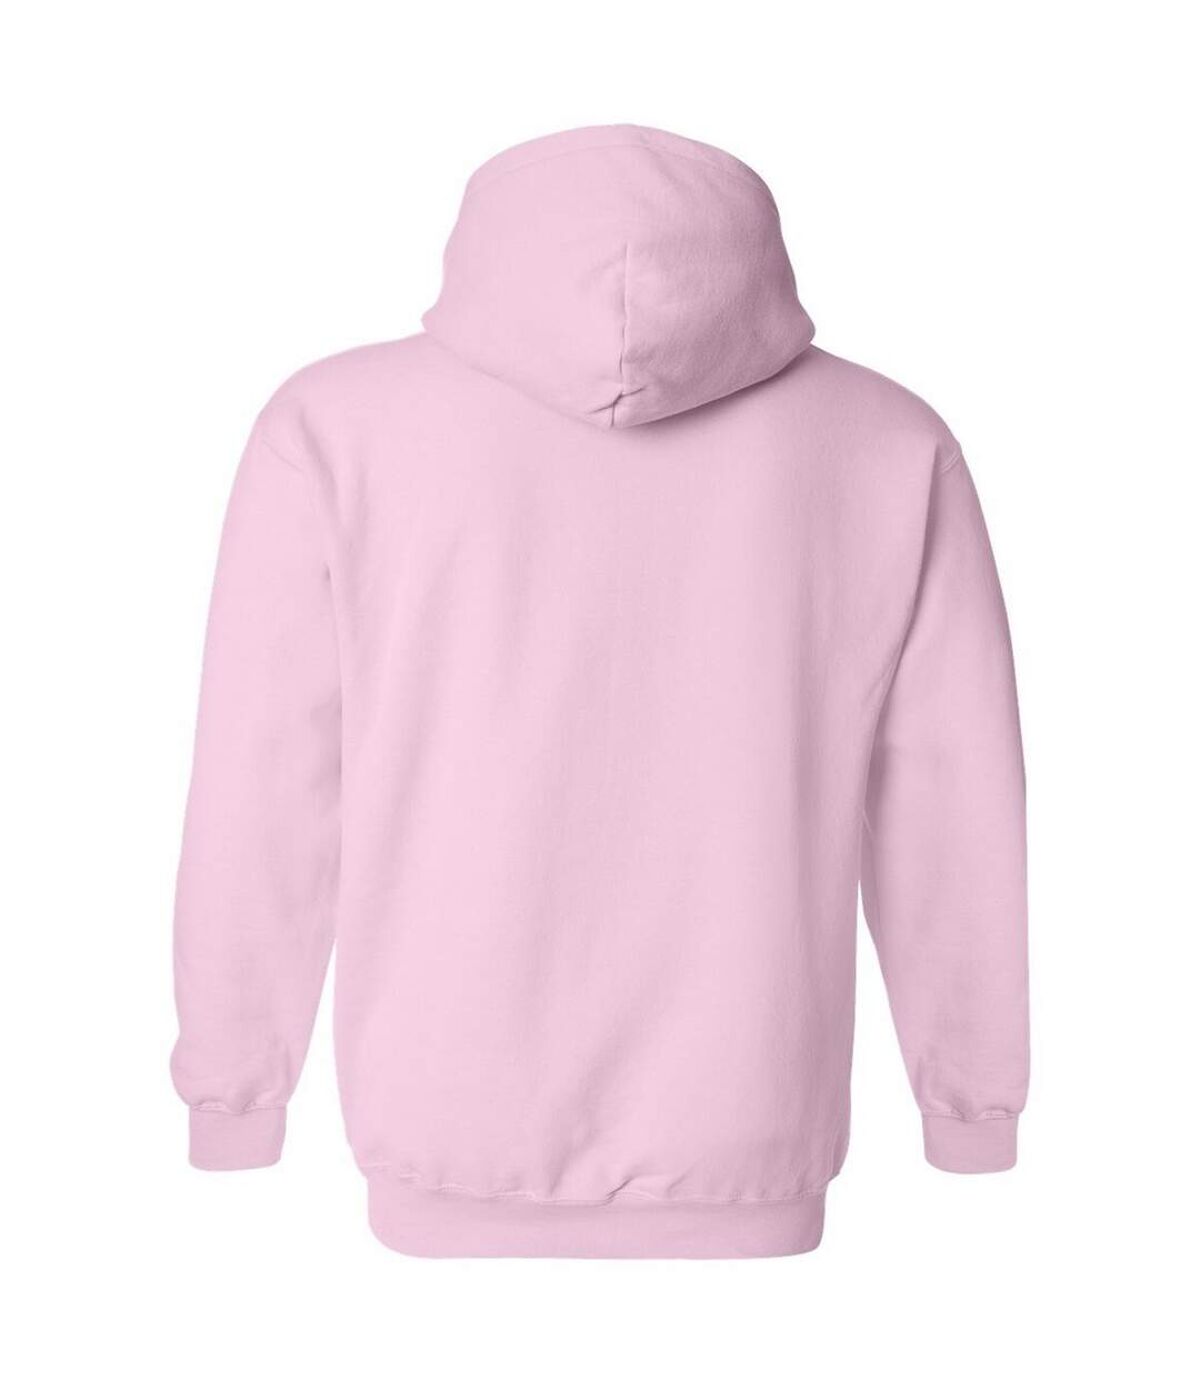 Gildan - Sweatshirt à capuche - Unisexe (Rose clair) - UTBC468